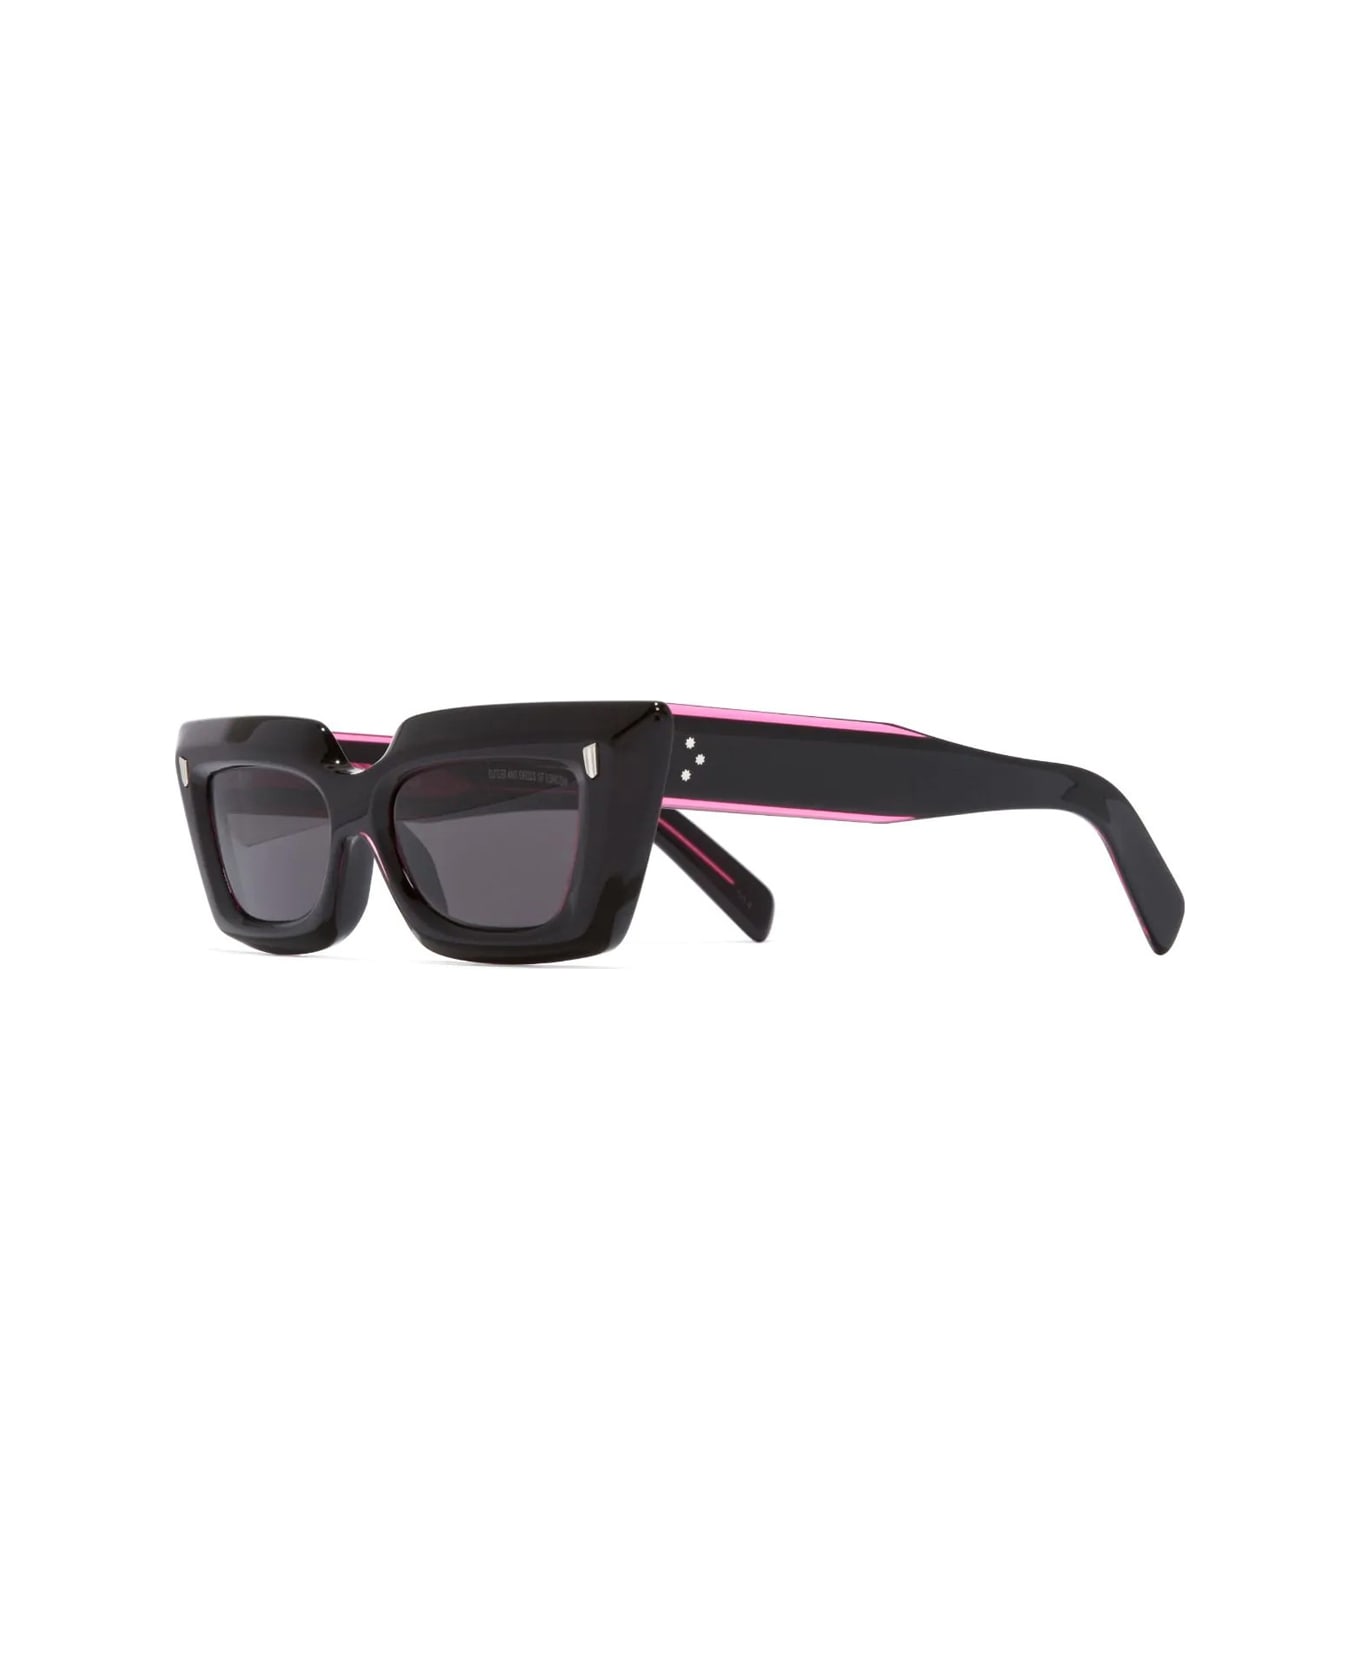 Cutler and Gross 1408 01 Sunglasses - Nero